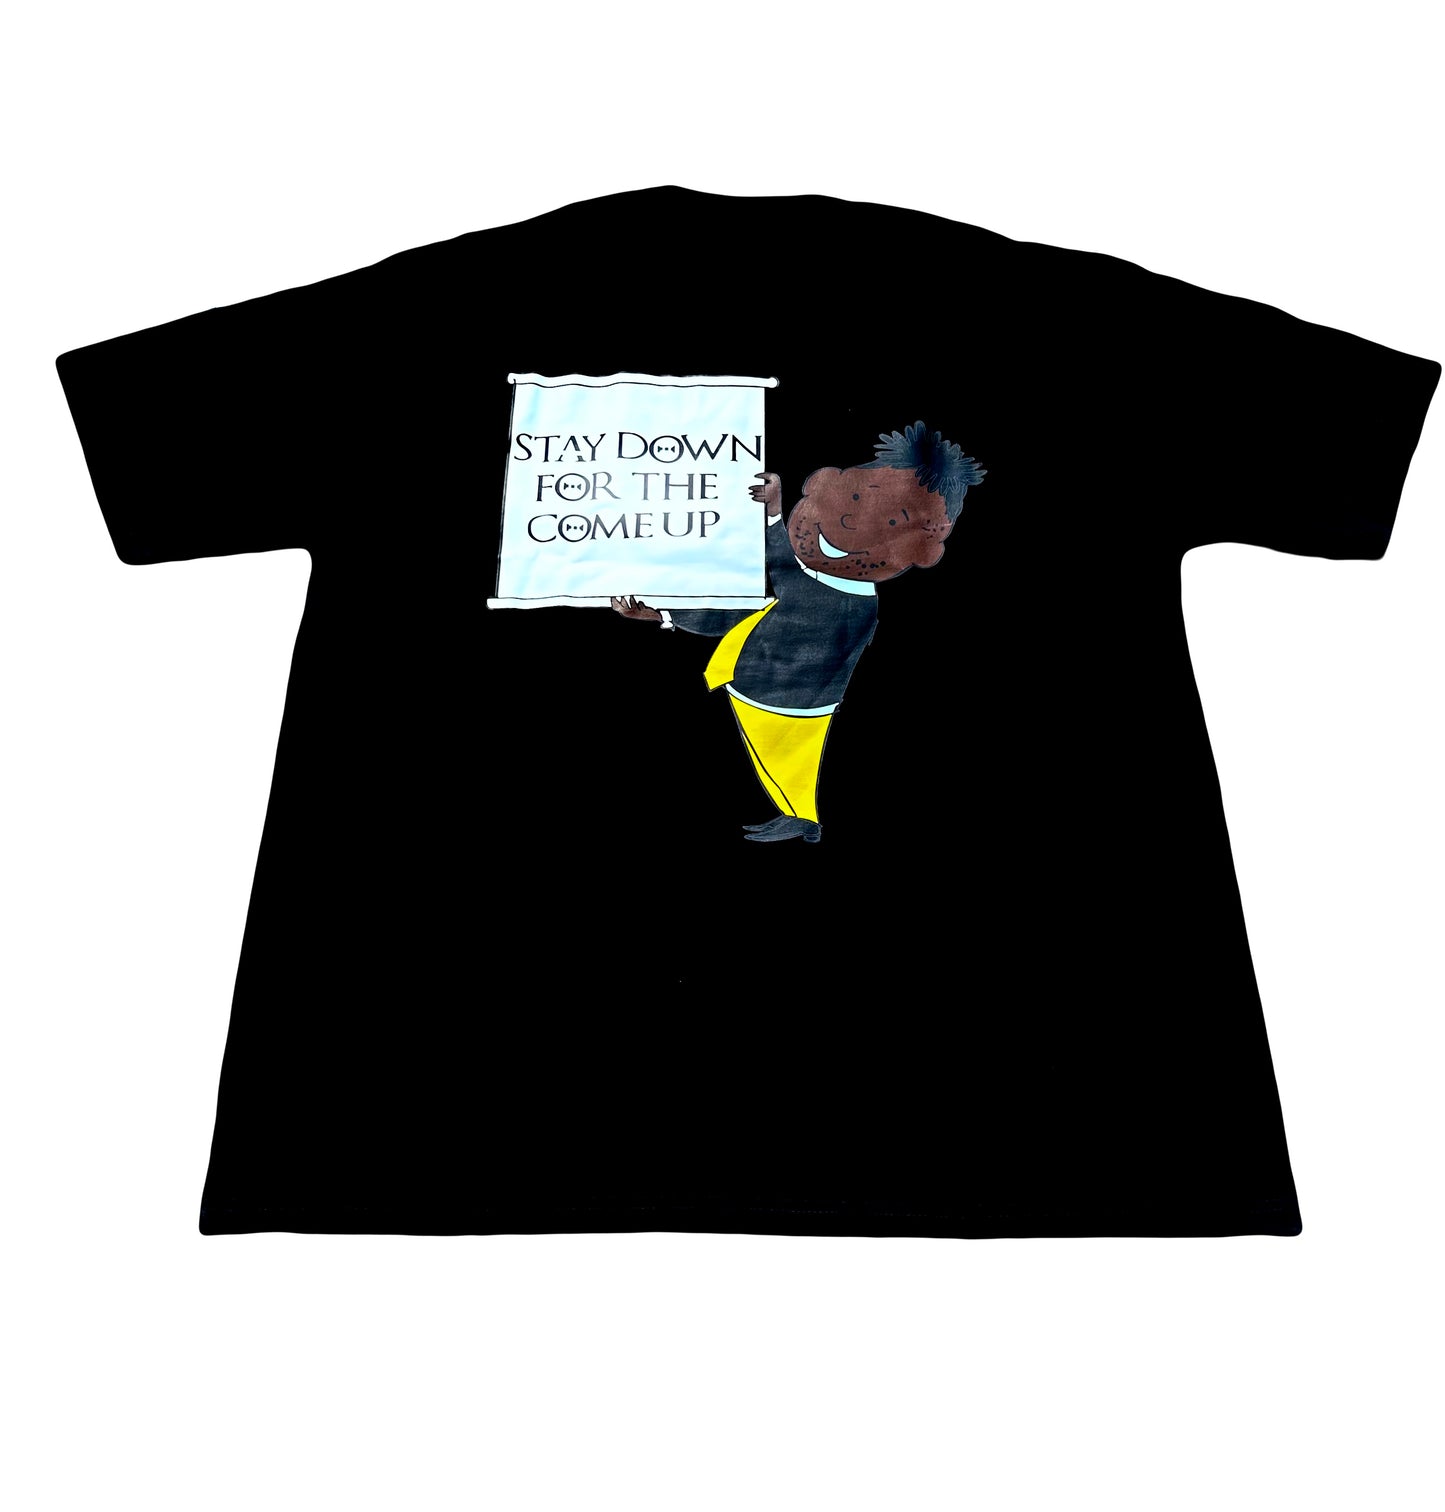 Virlago “U” T-shirt